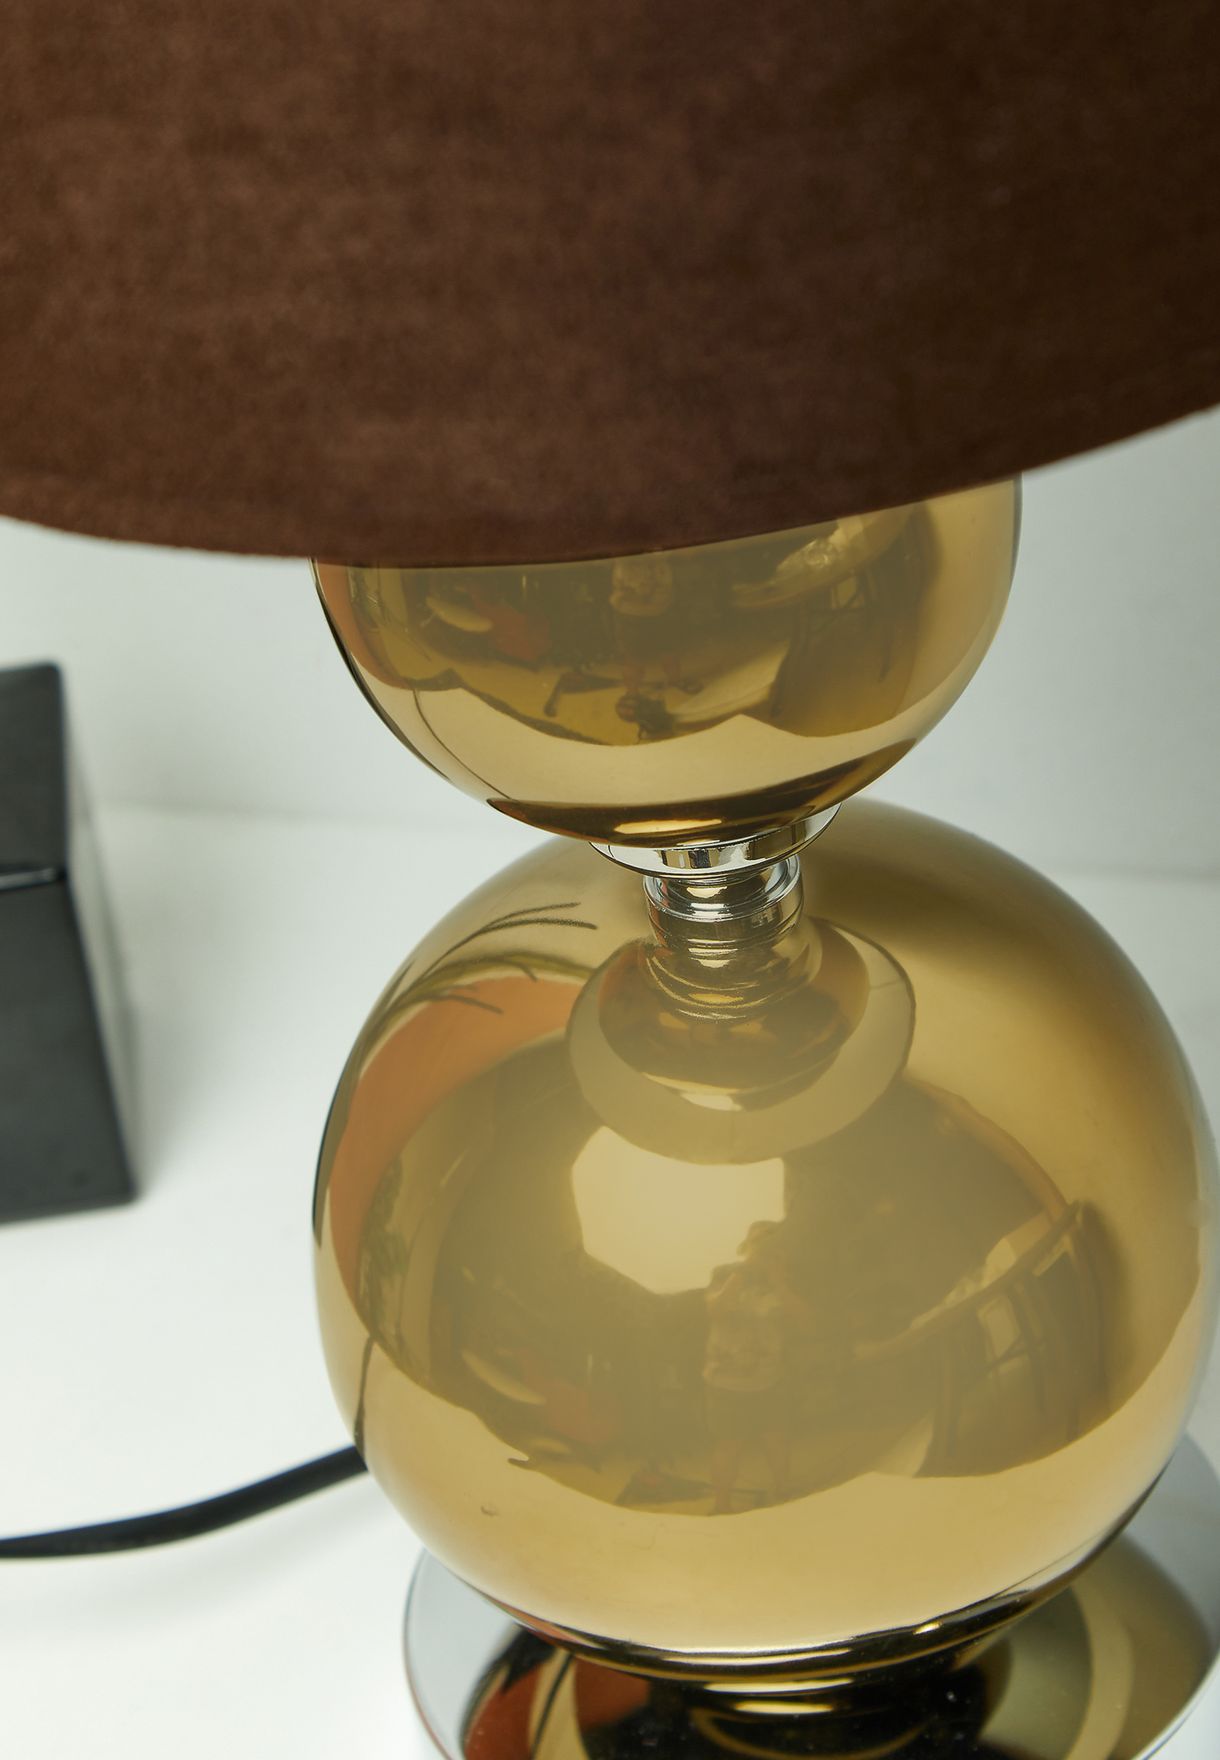 Copper Finish Ceramic Ball Detail Table Lamp